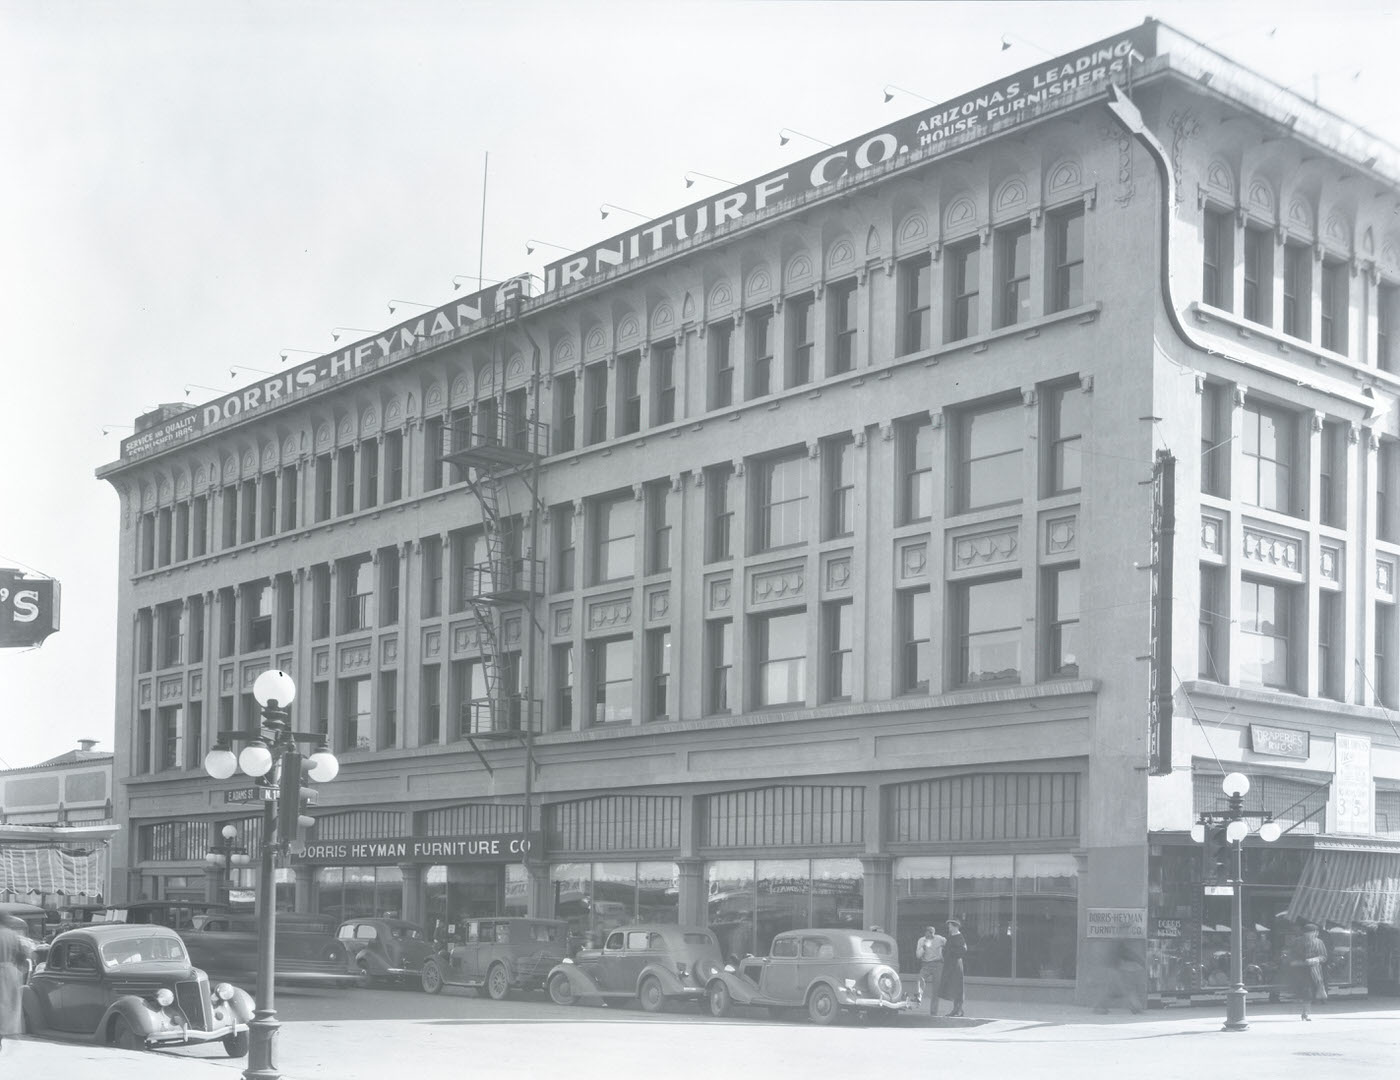 Dorris-Heyman Furniture Company Building Exterior, 1900s